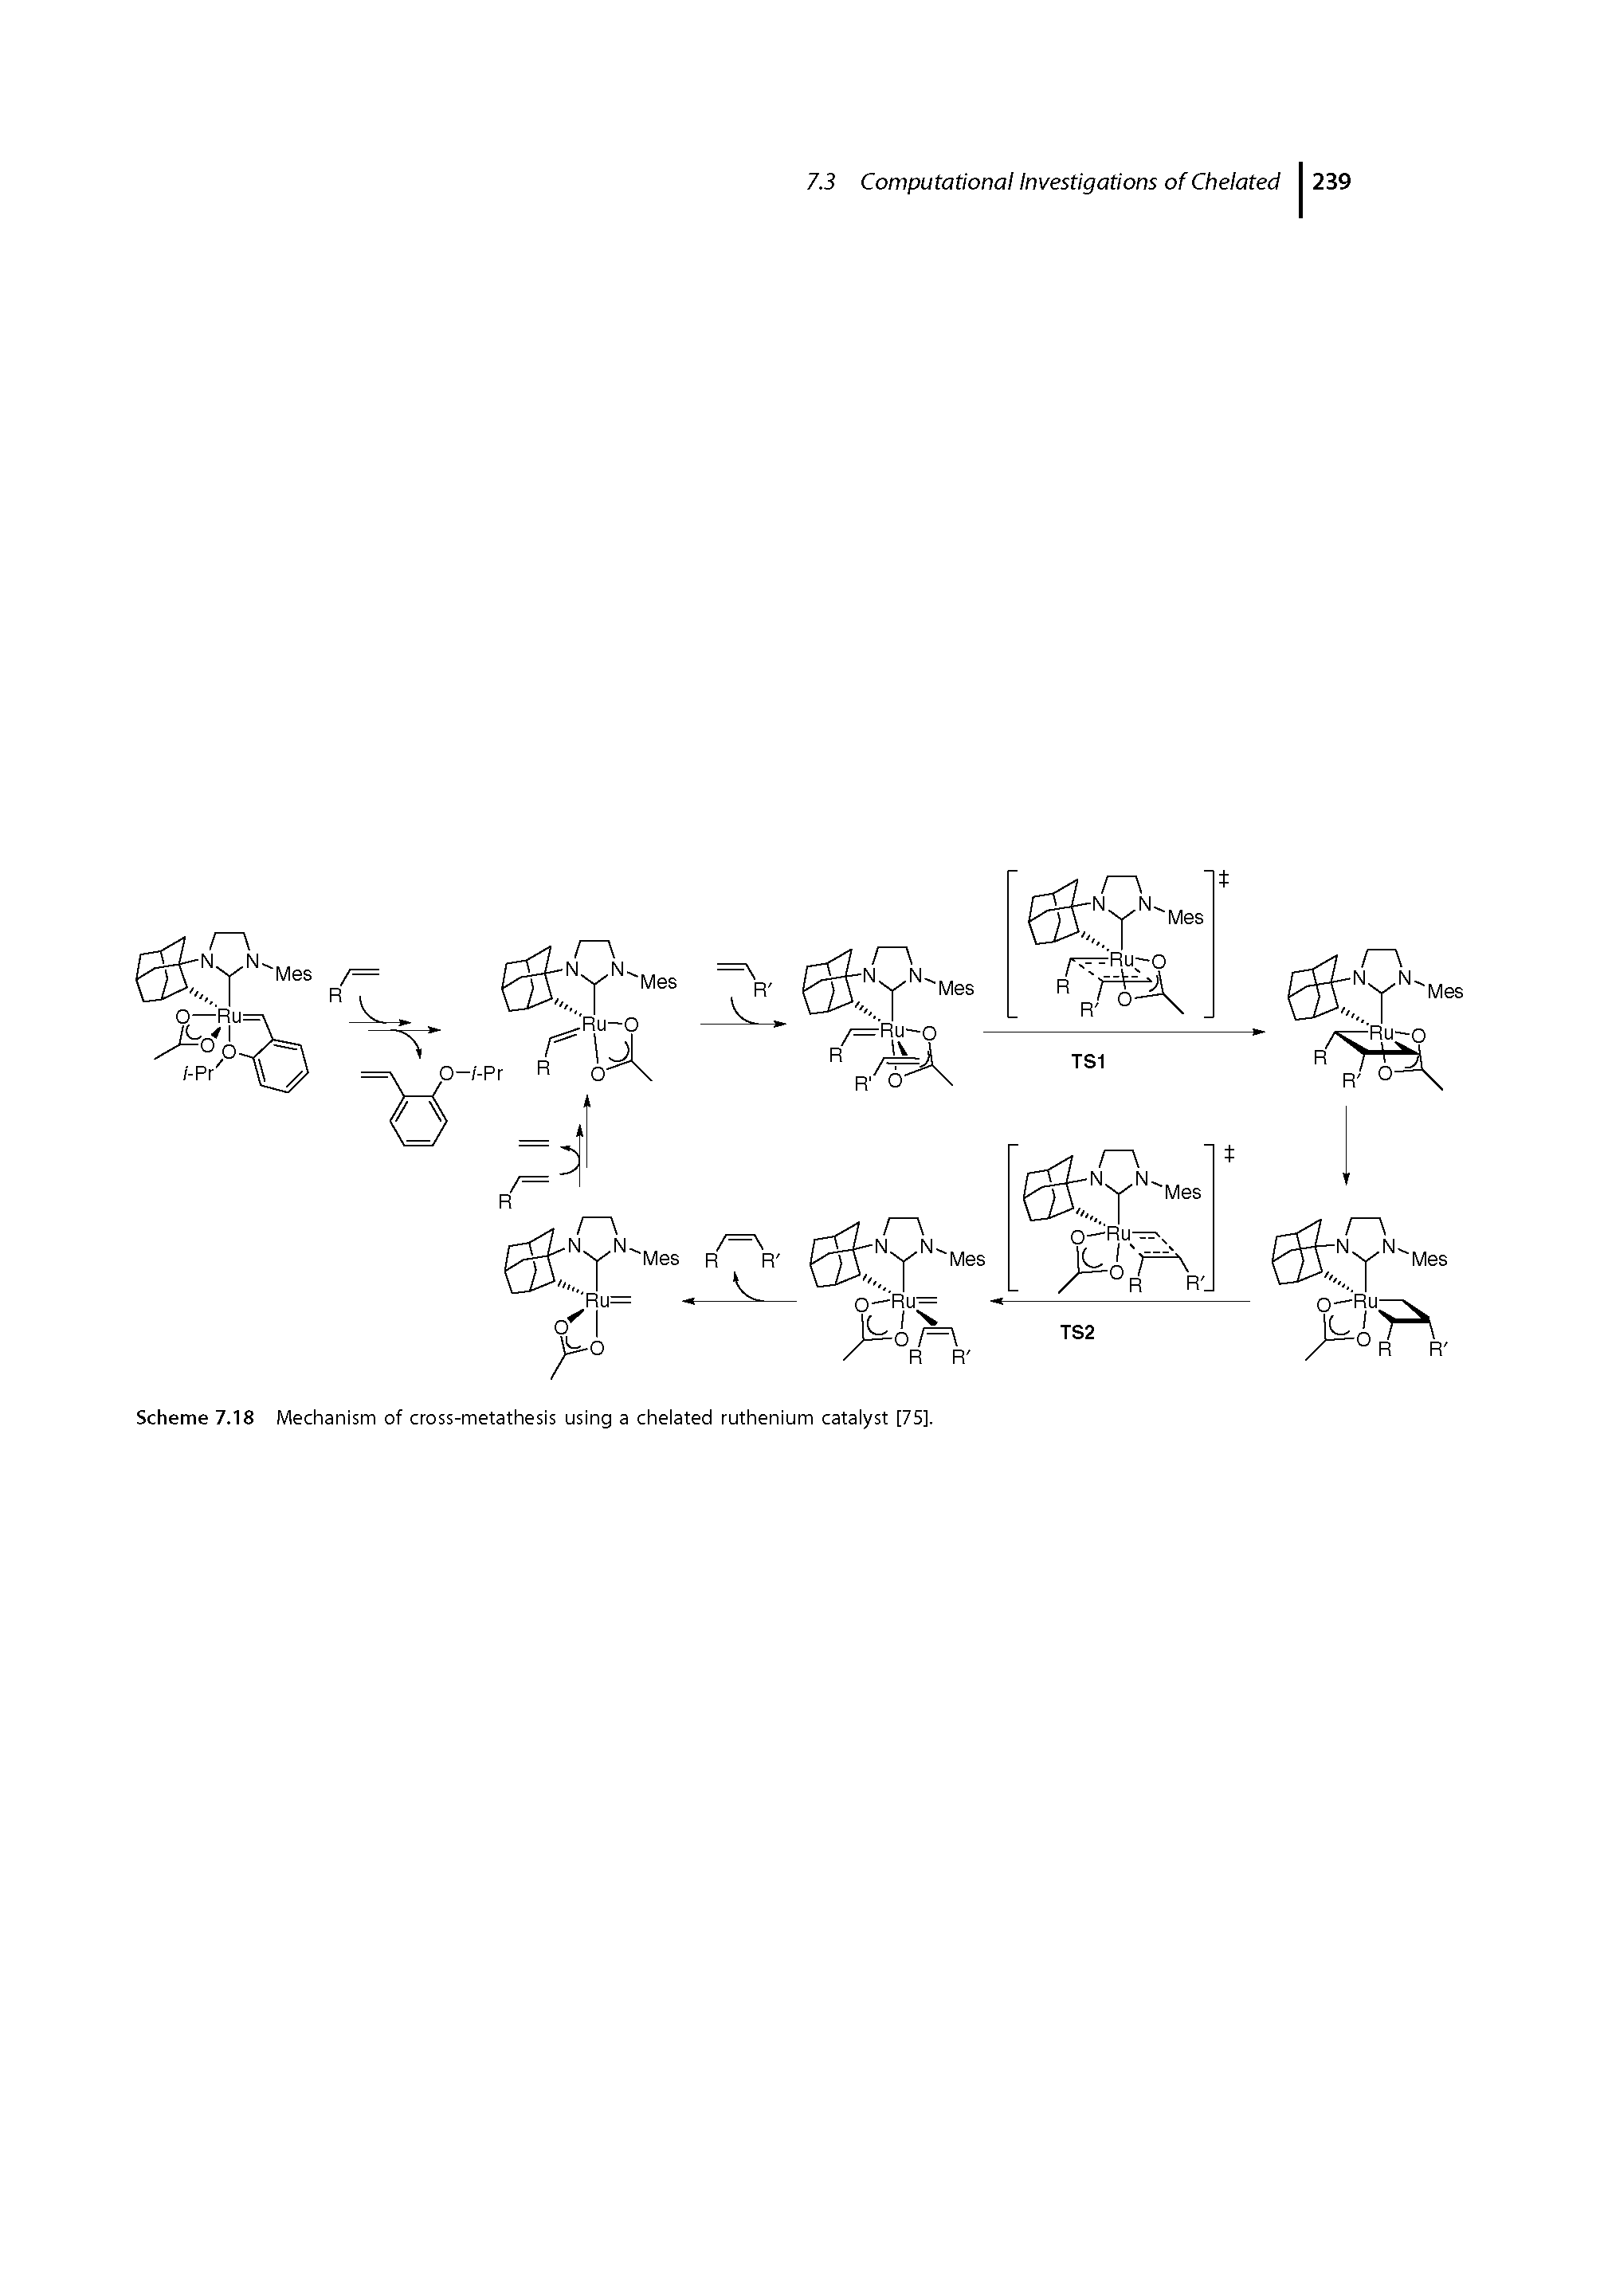 Scheme 7.18 Mechanism of cross-metathesis using a chelated ruthenium catalyst [75].